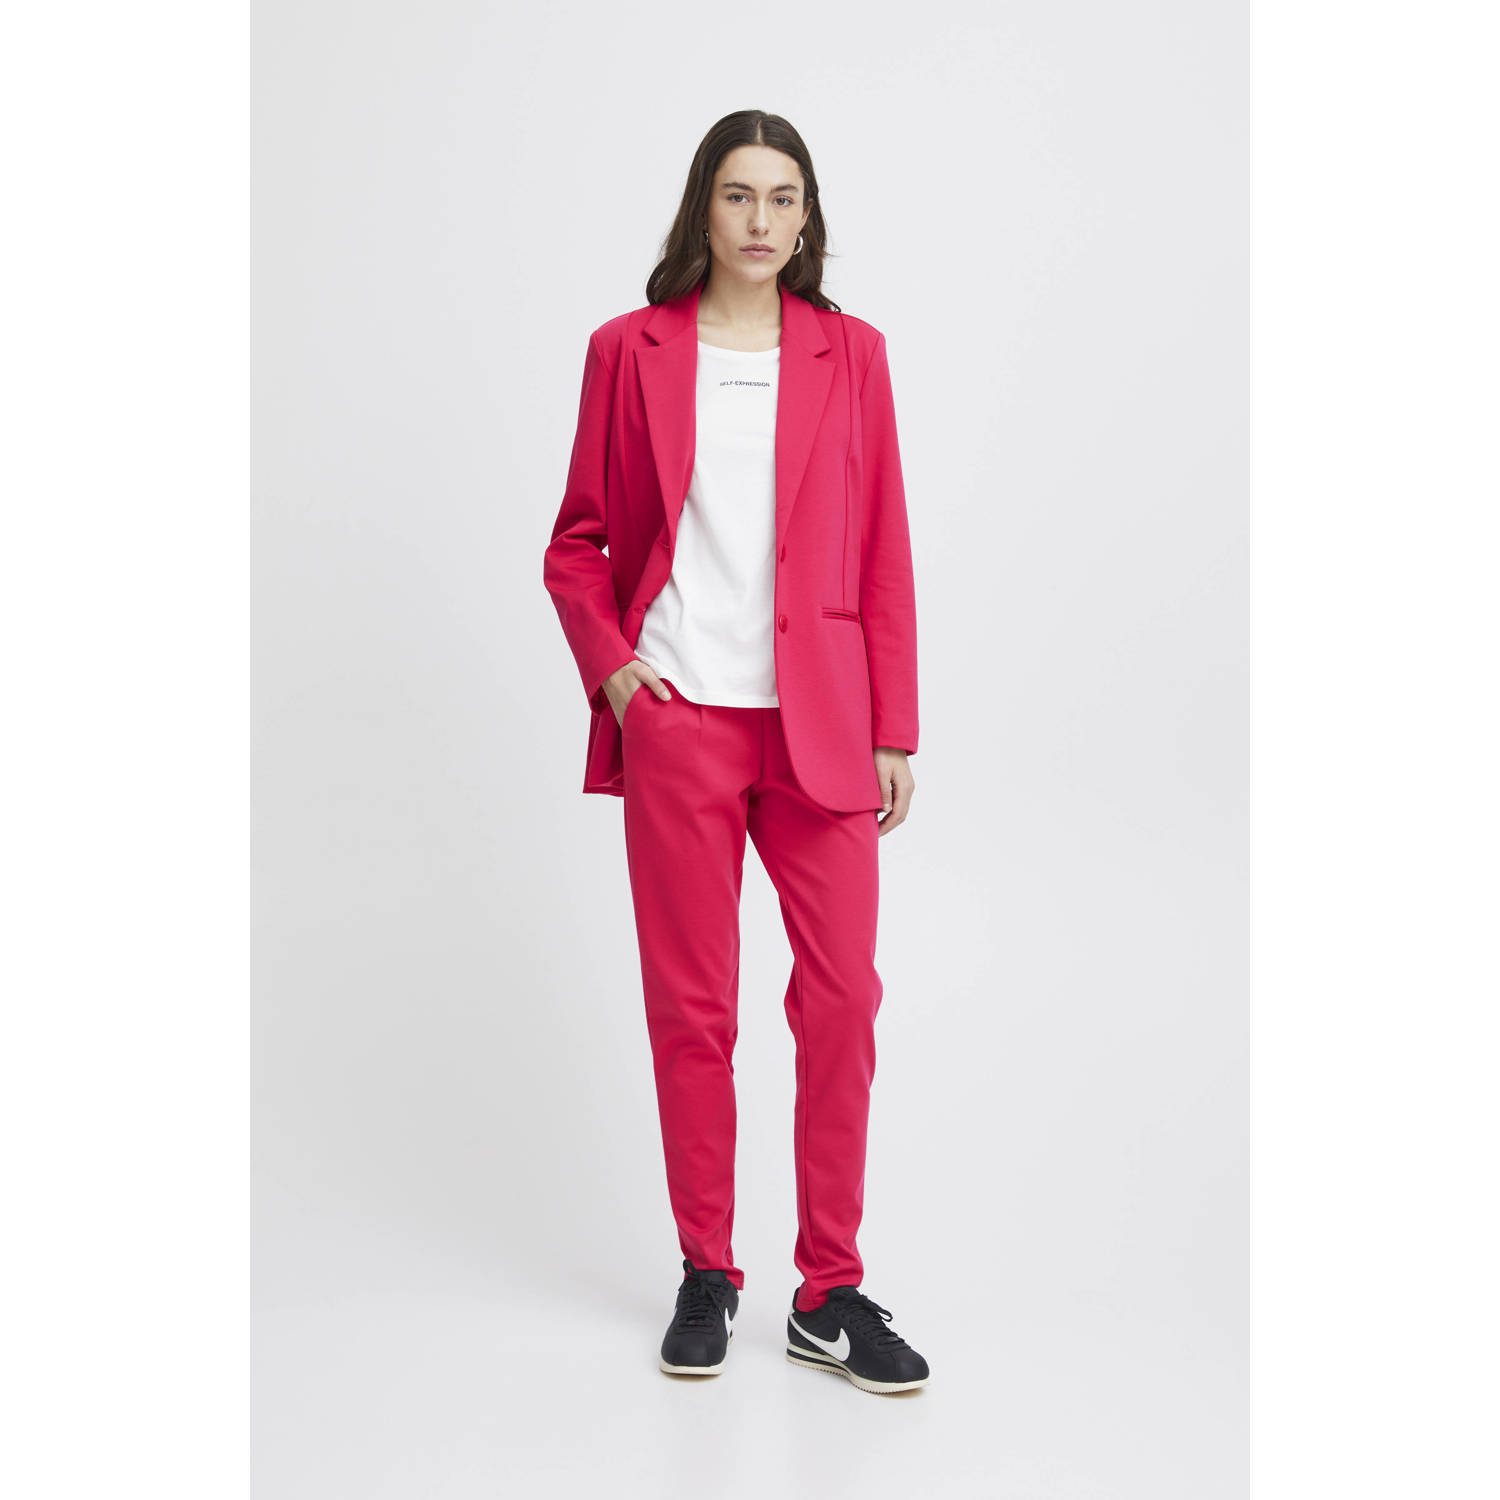 ICHI regular fit pantalon roze